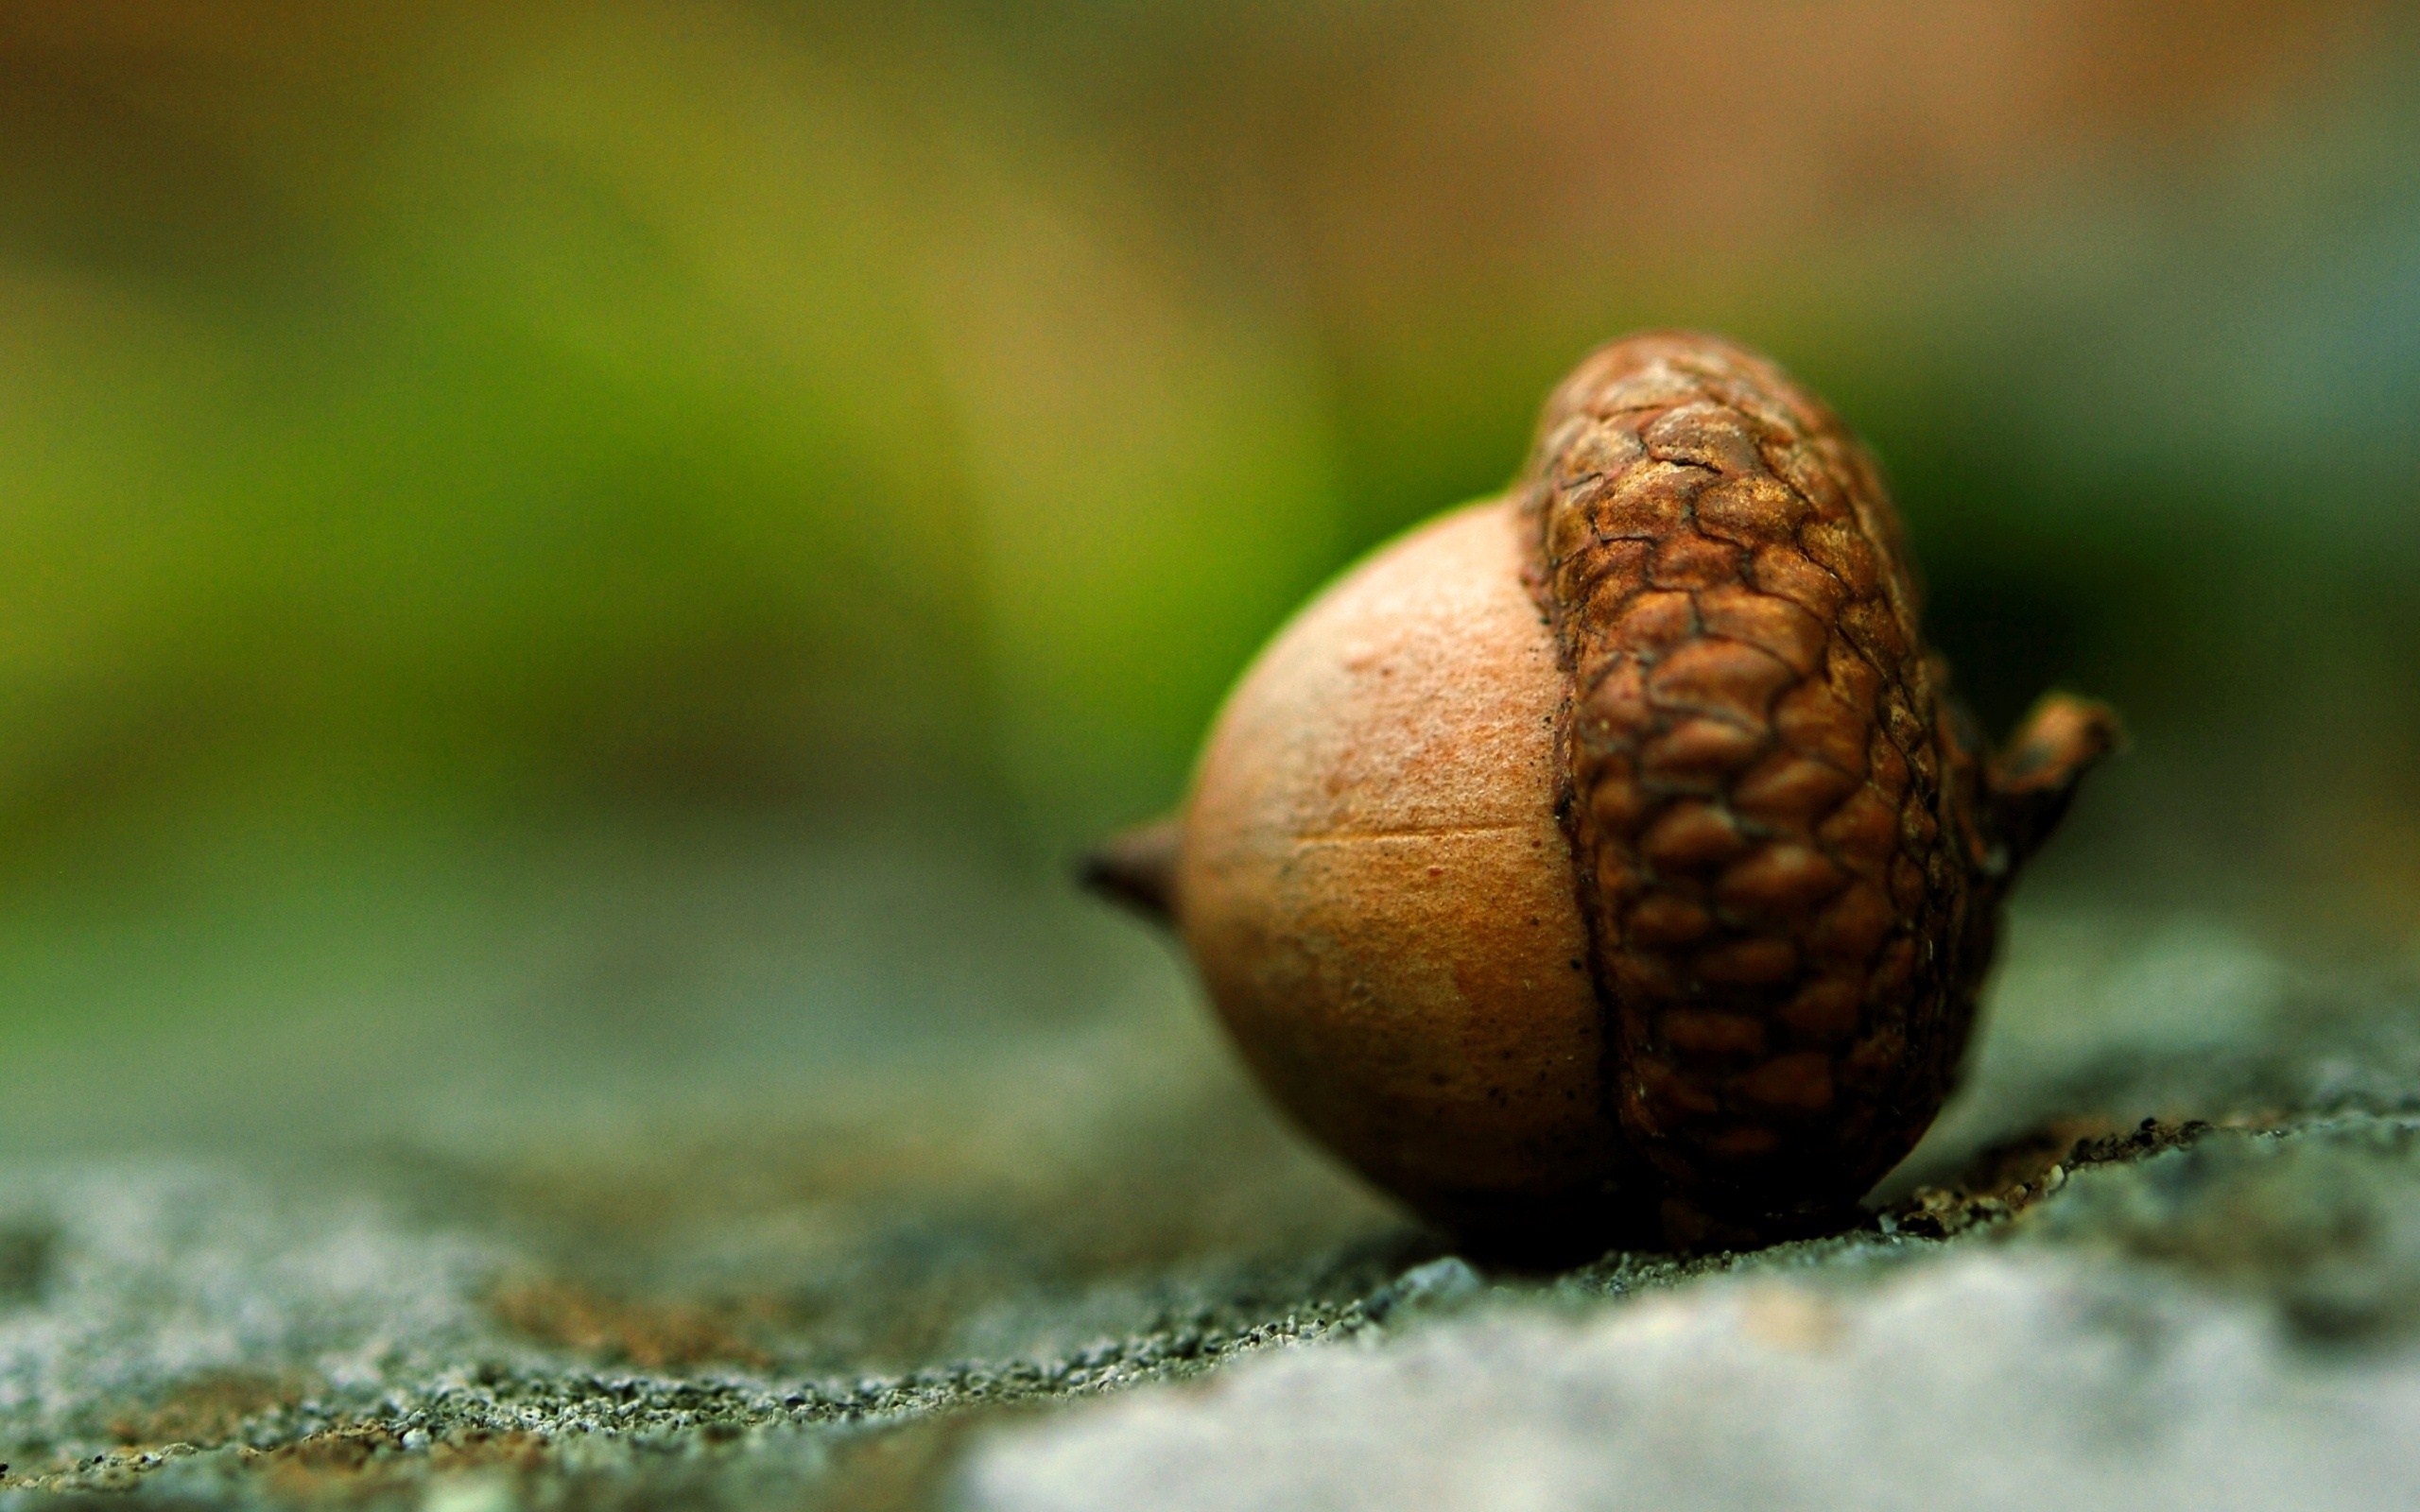 acorn wallpaper,sea snail,acorn,close up,macro photography,tree